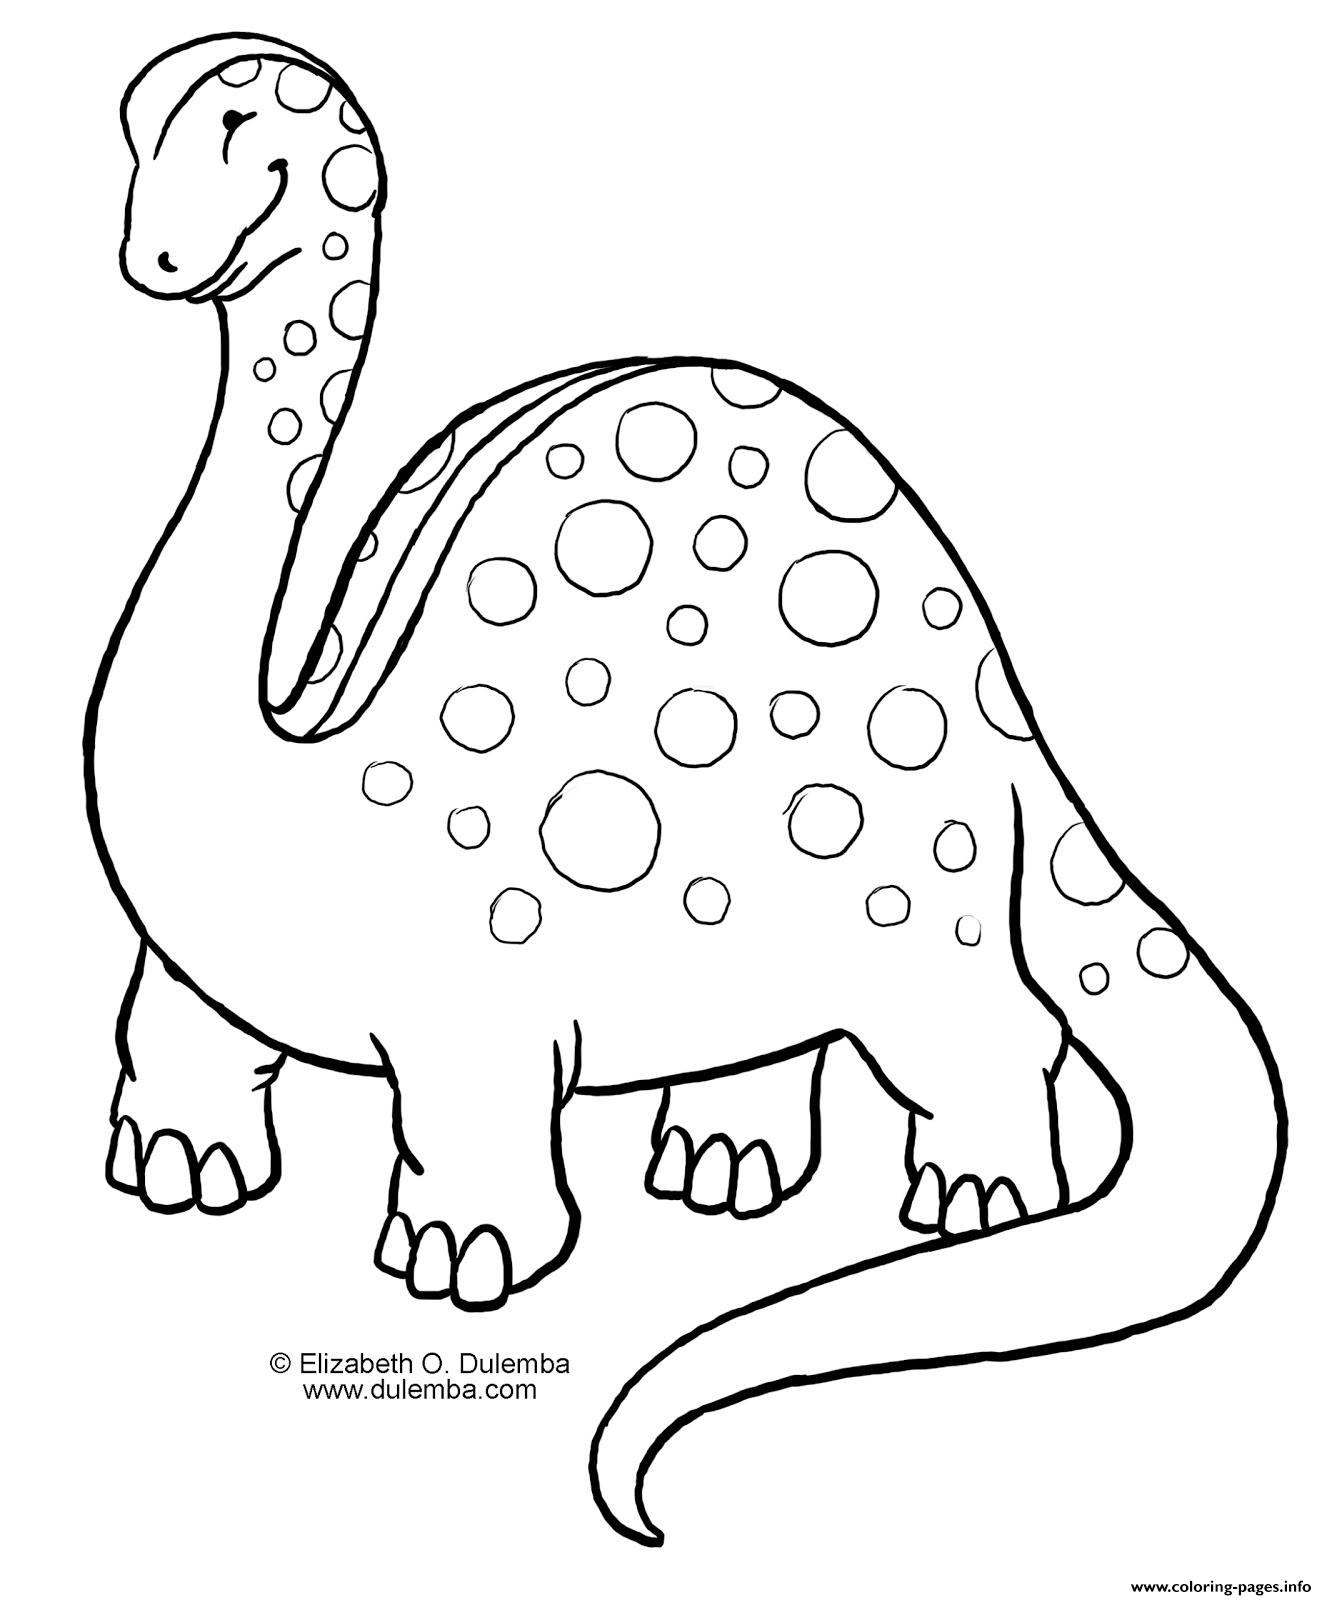 Dinosaur 9 coloring